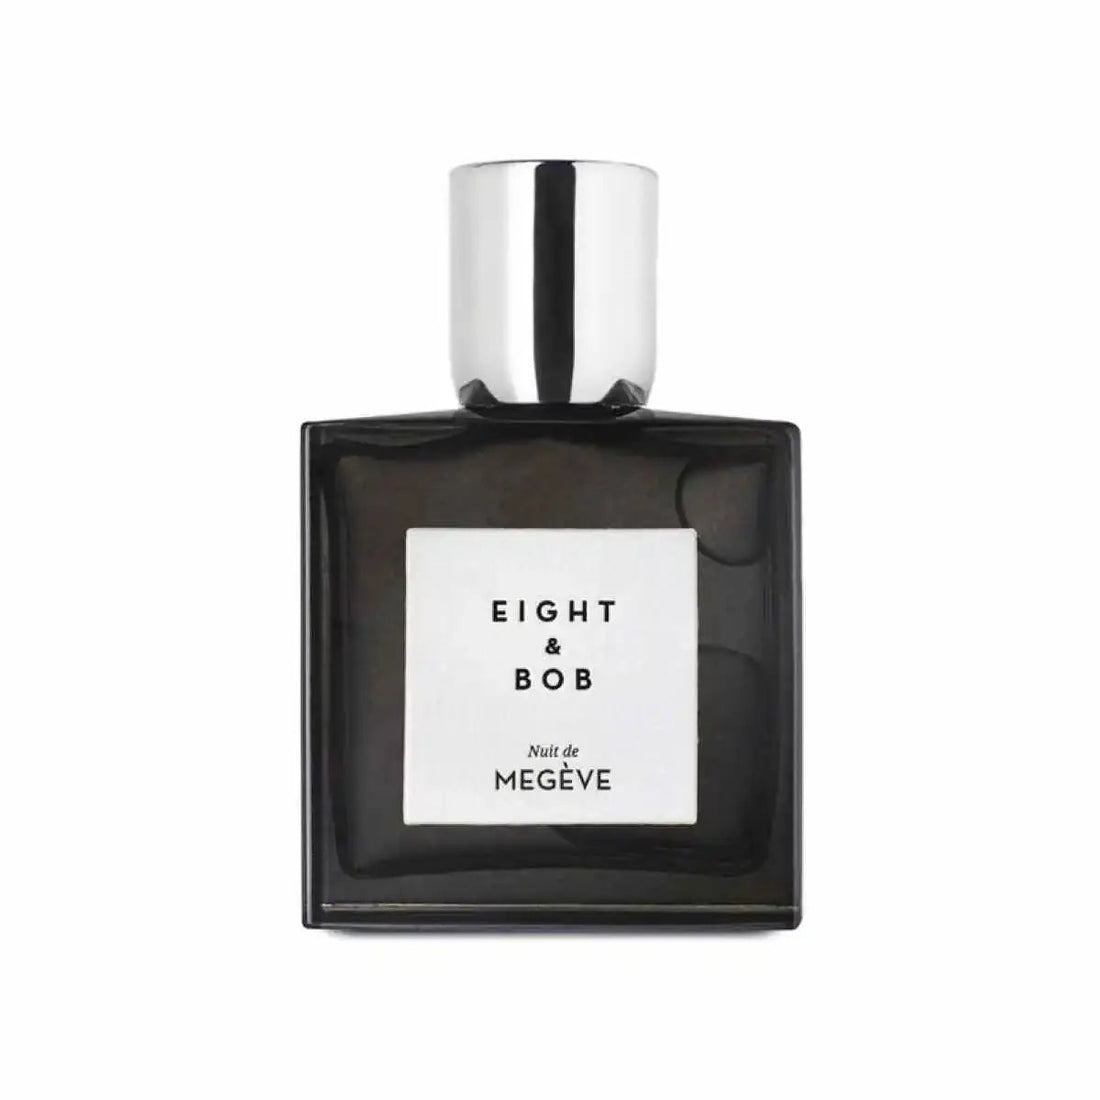 Ocho y bob Nuit de Megeve eau de parfum - 30 ml